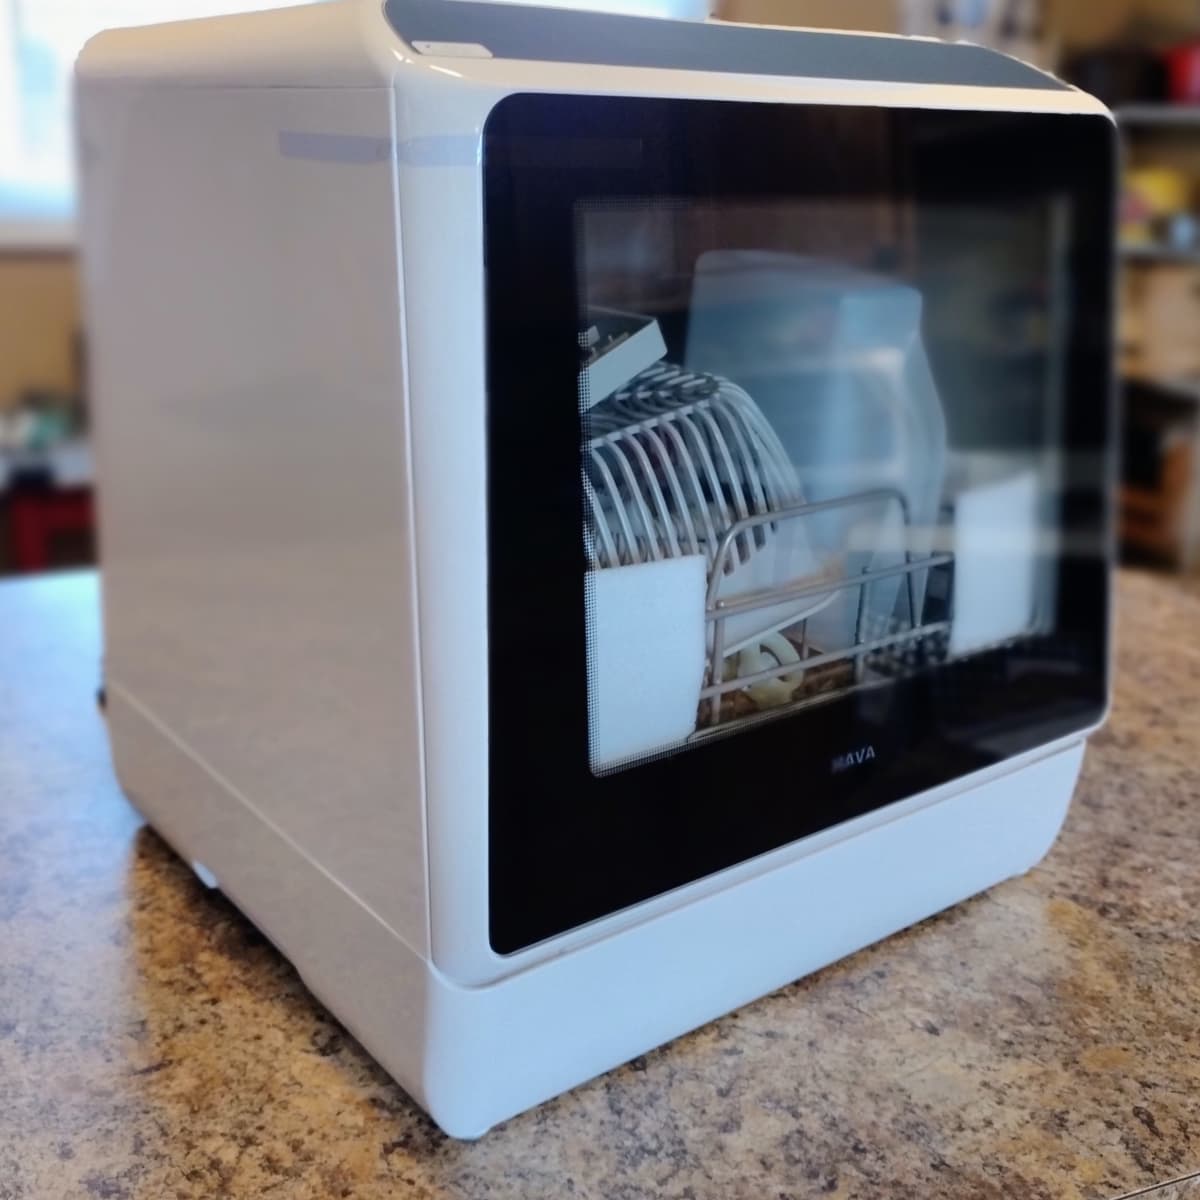 Novete Portable Countertop Dishwasher